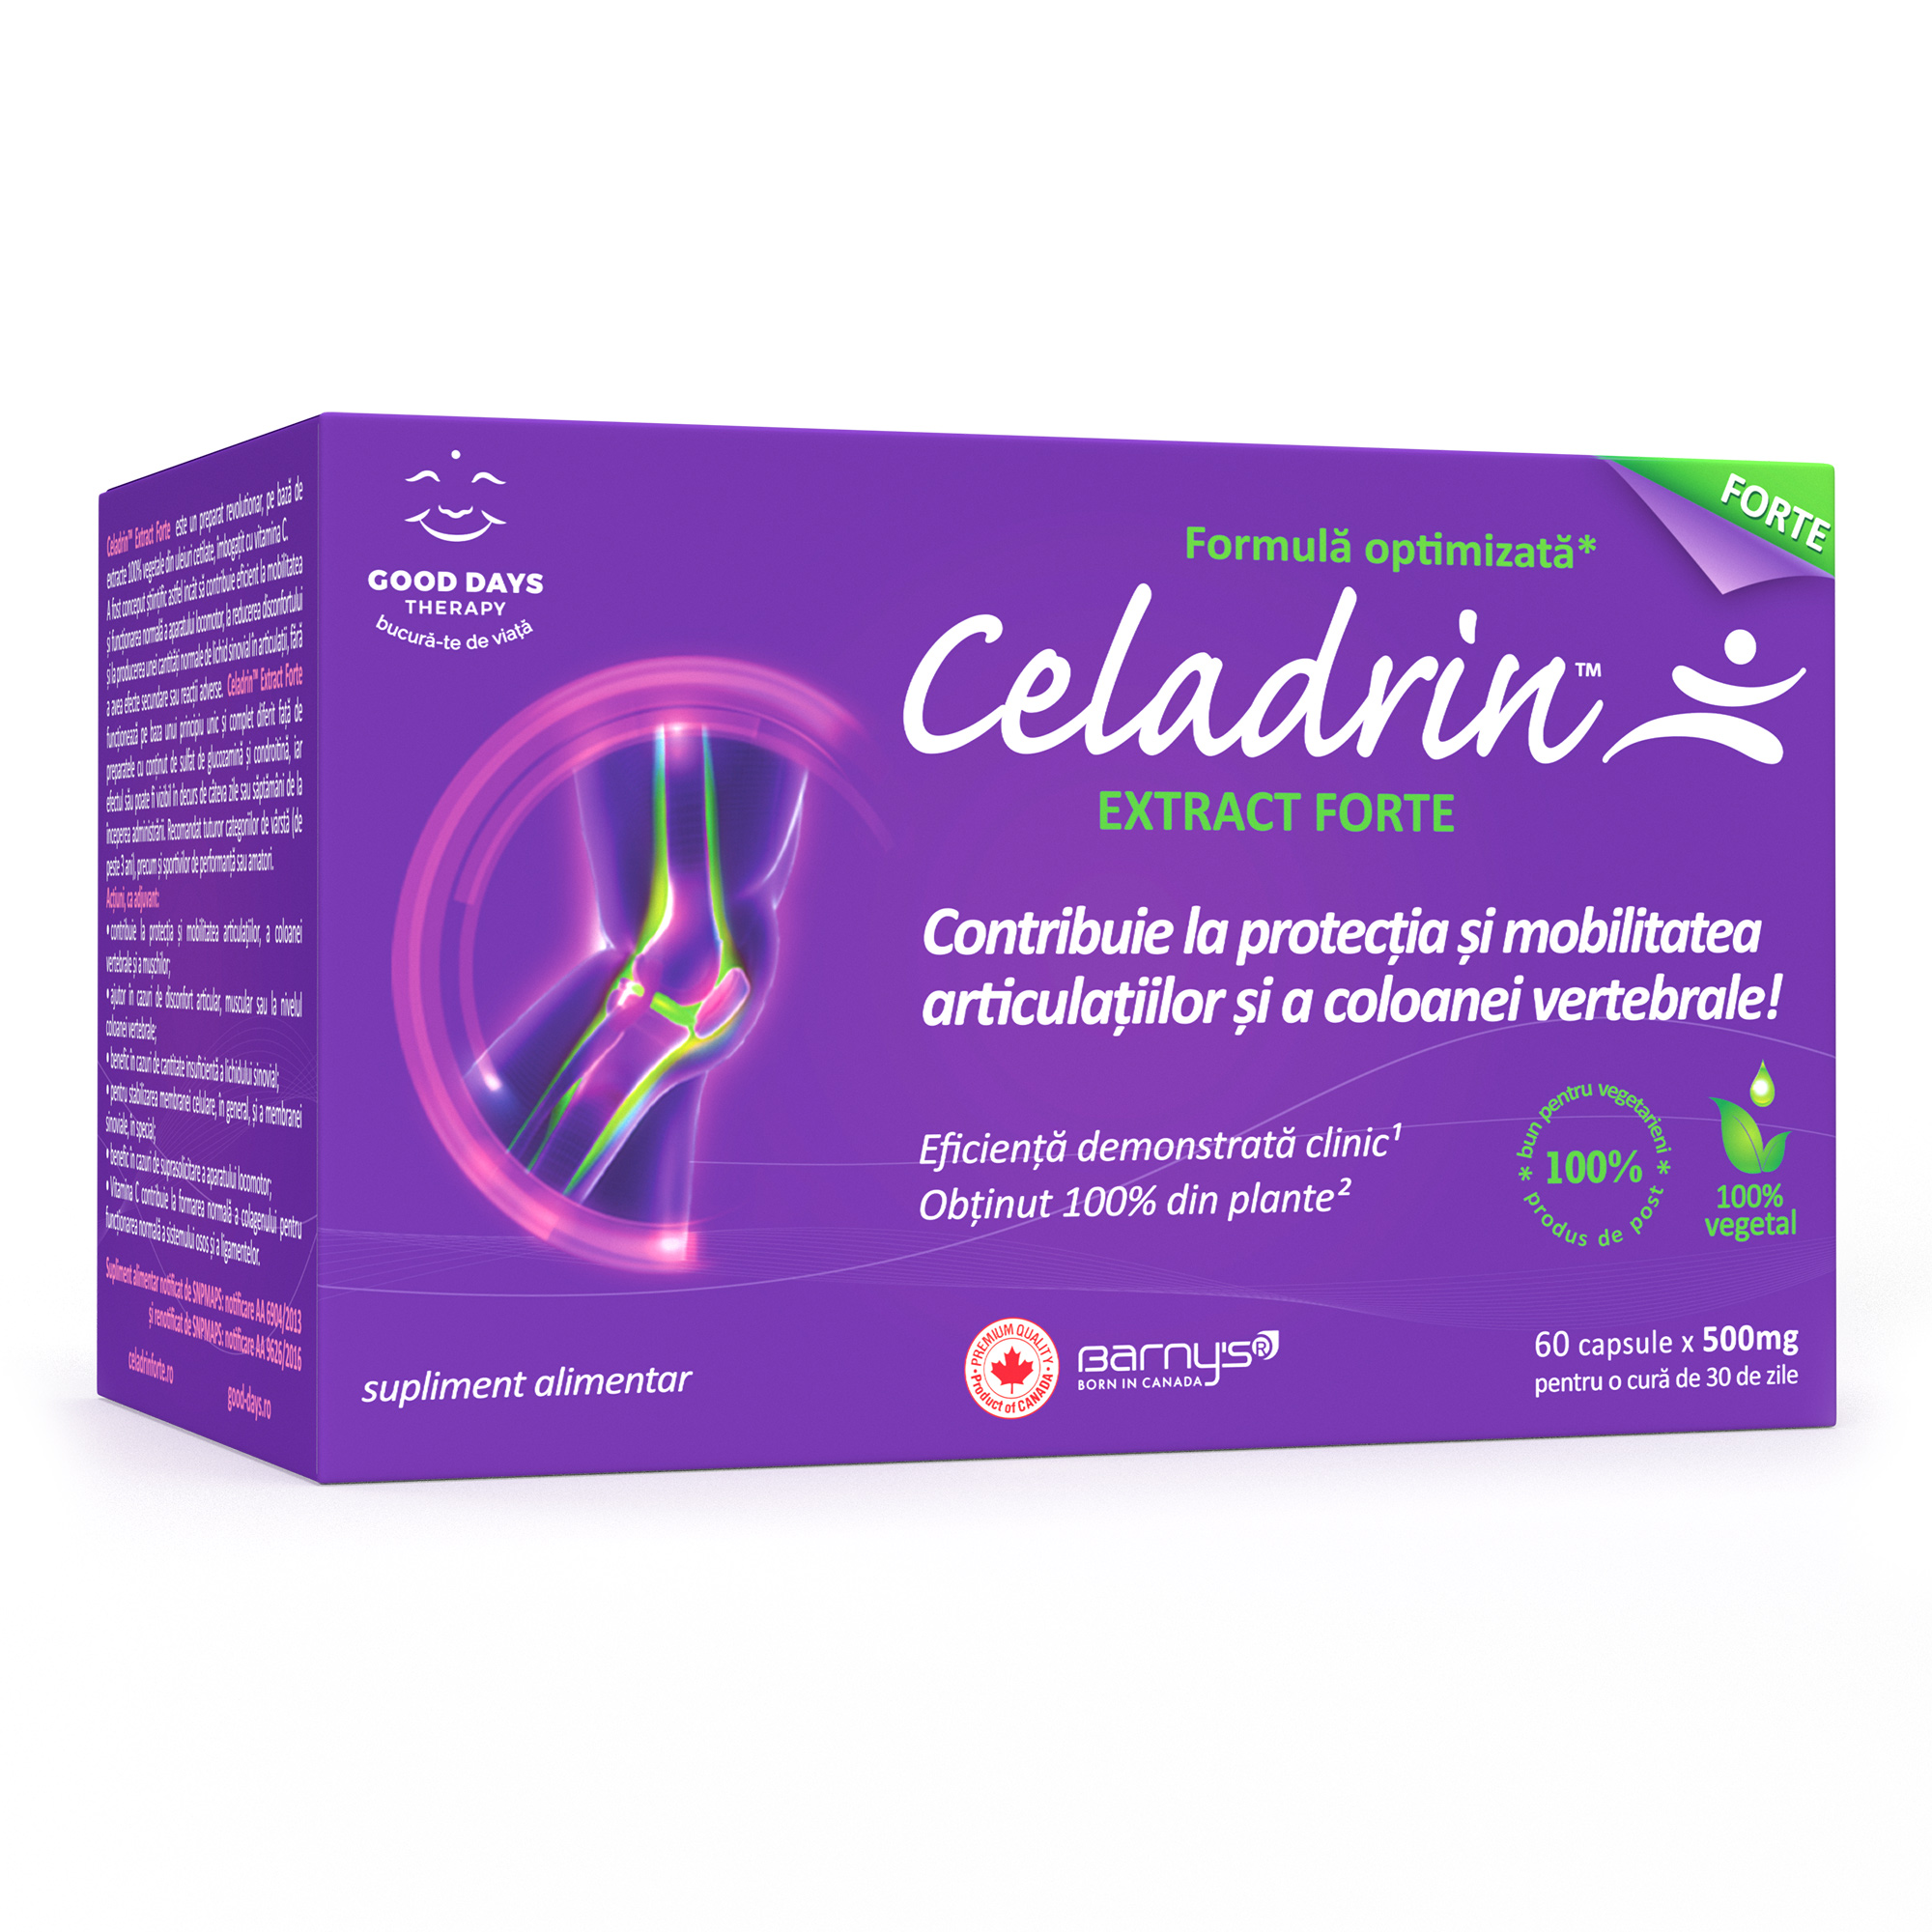 Celadrin Extract Forte